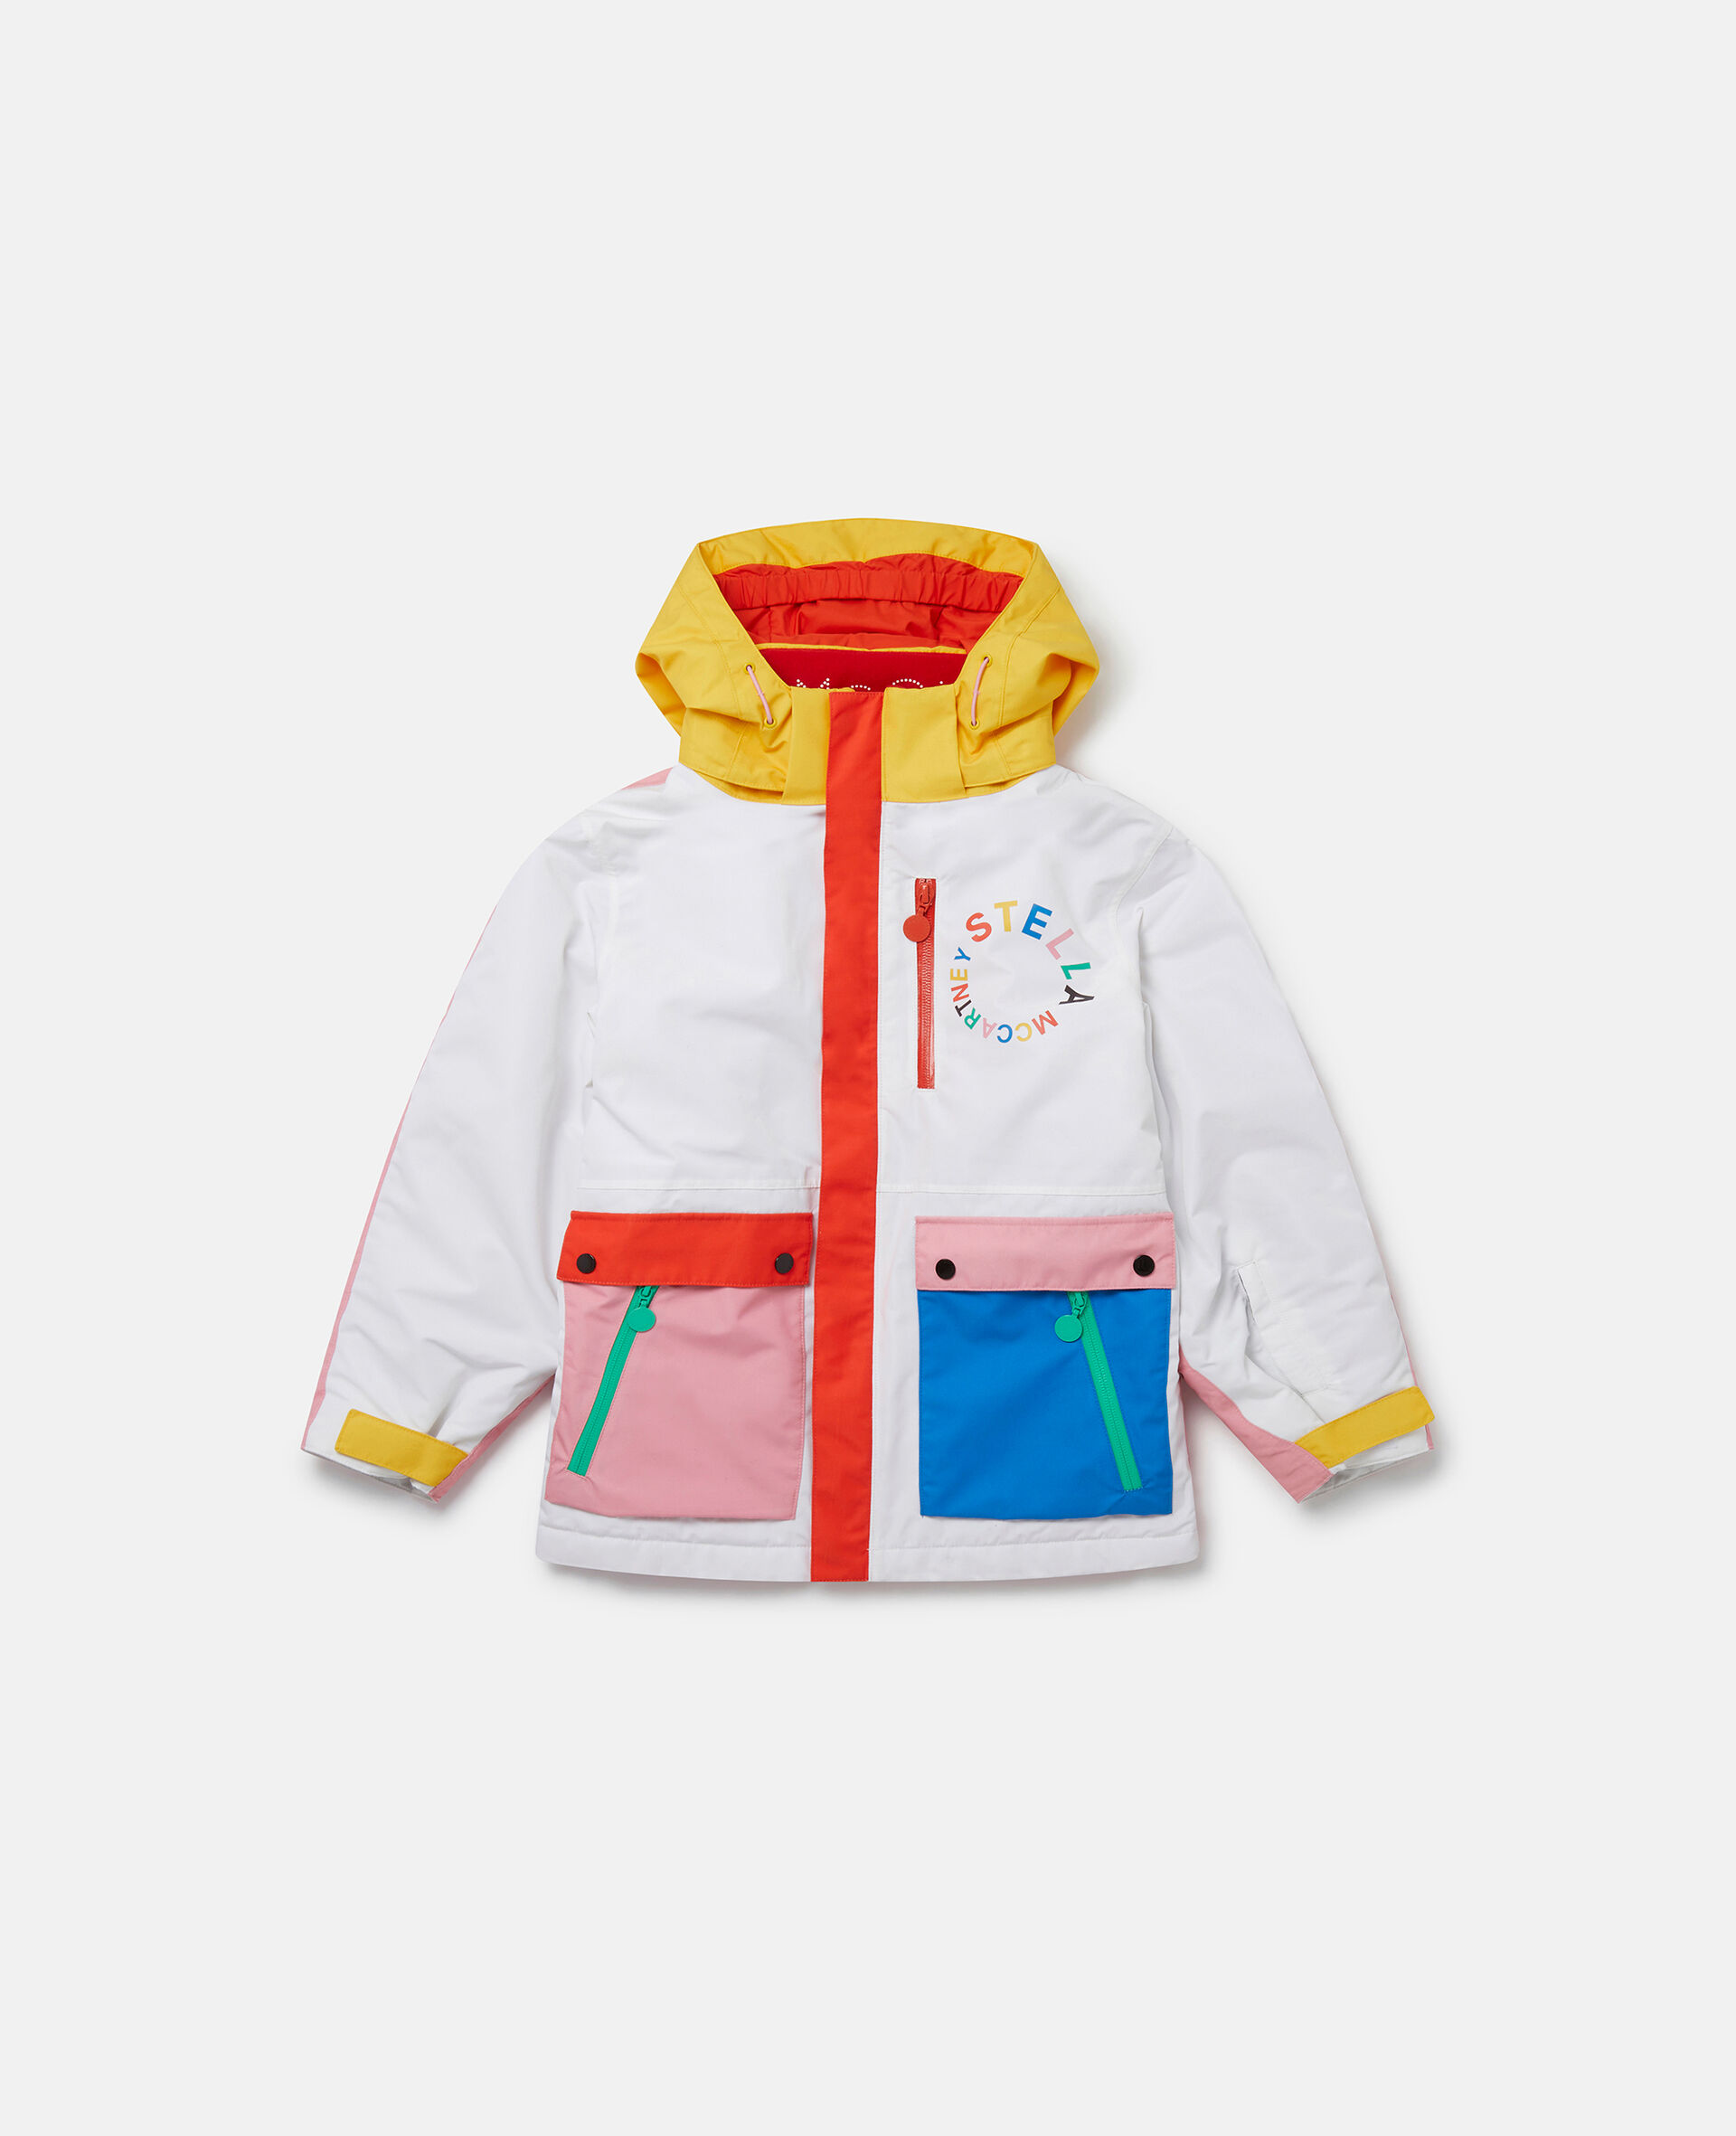 Veste de ski a capuche motif color block-Fantaisie-medium